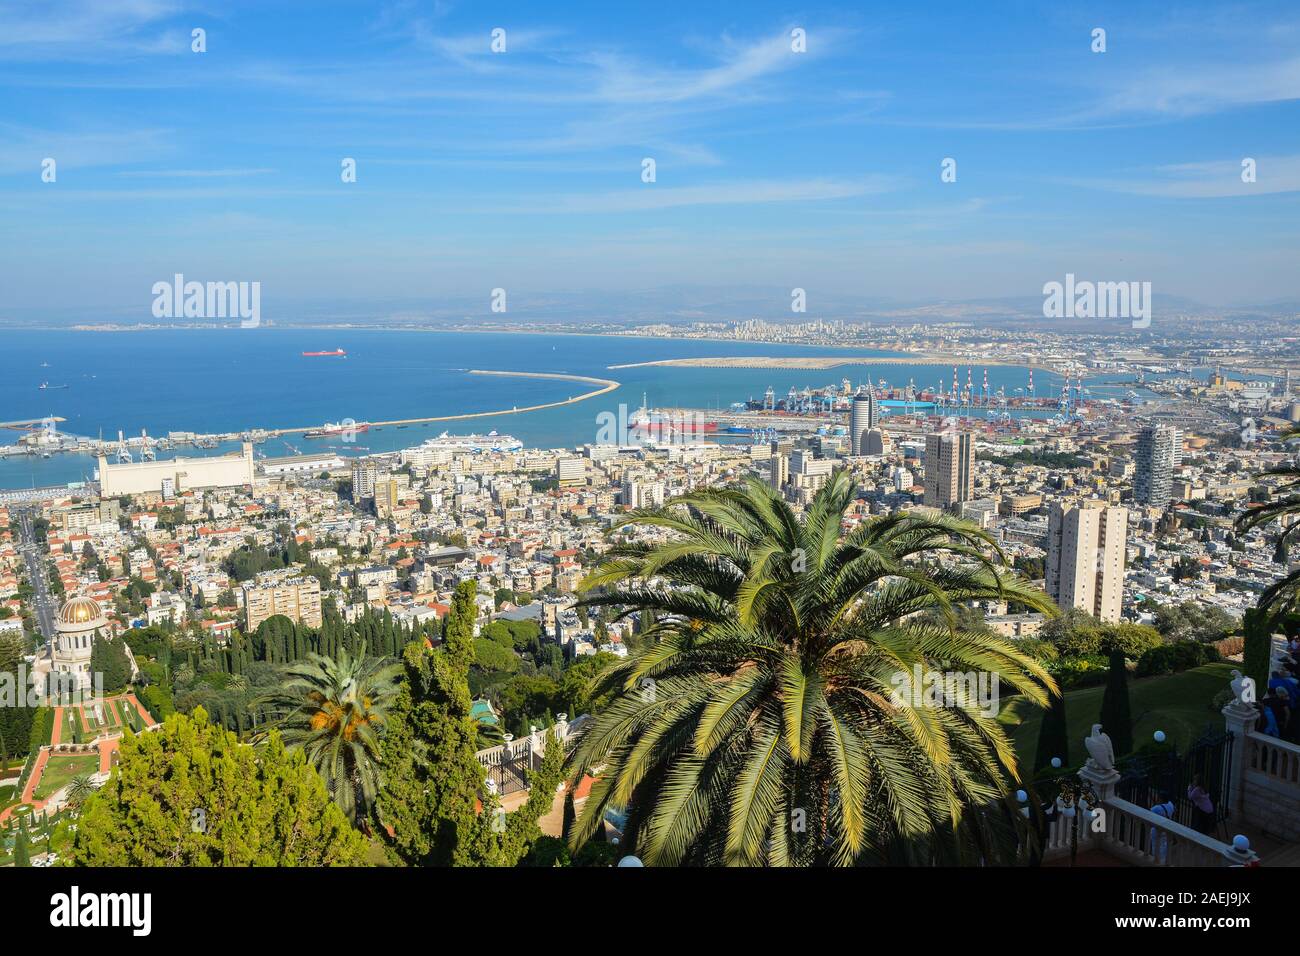 View of Haifa from the hill. Haifa is an Israeli city and port on the Mediterranean Sea. Stock Photo